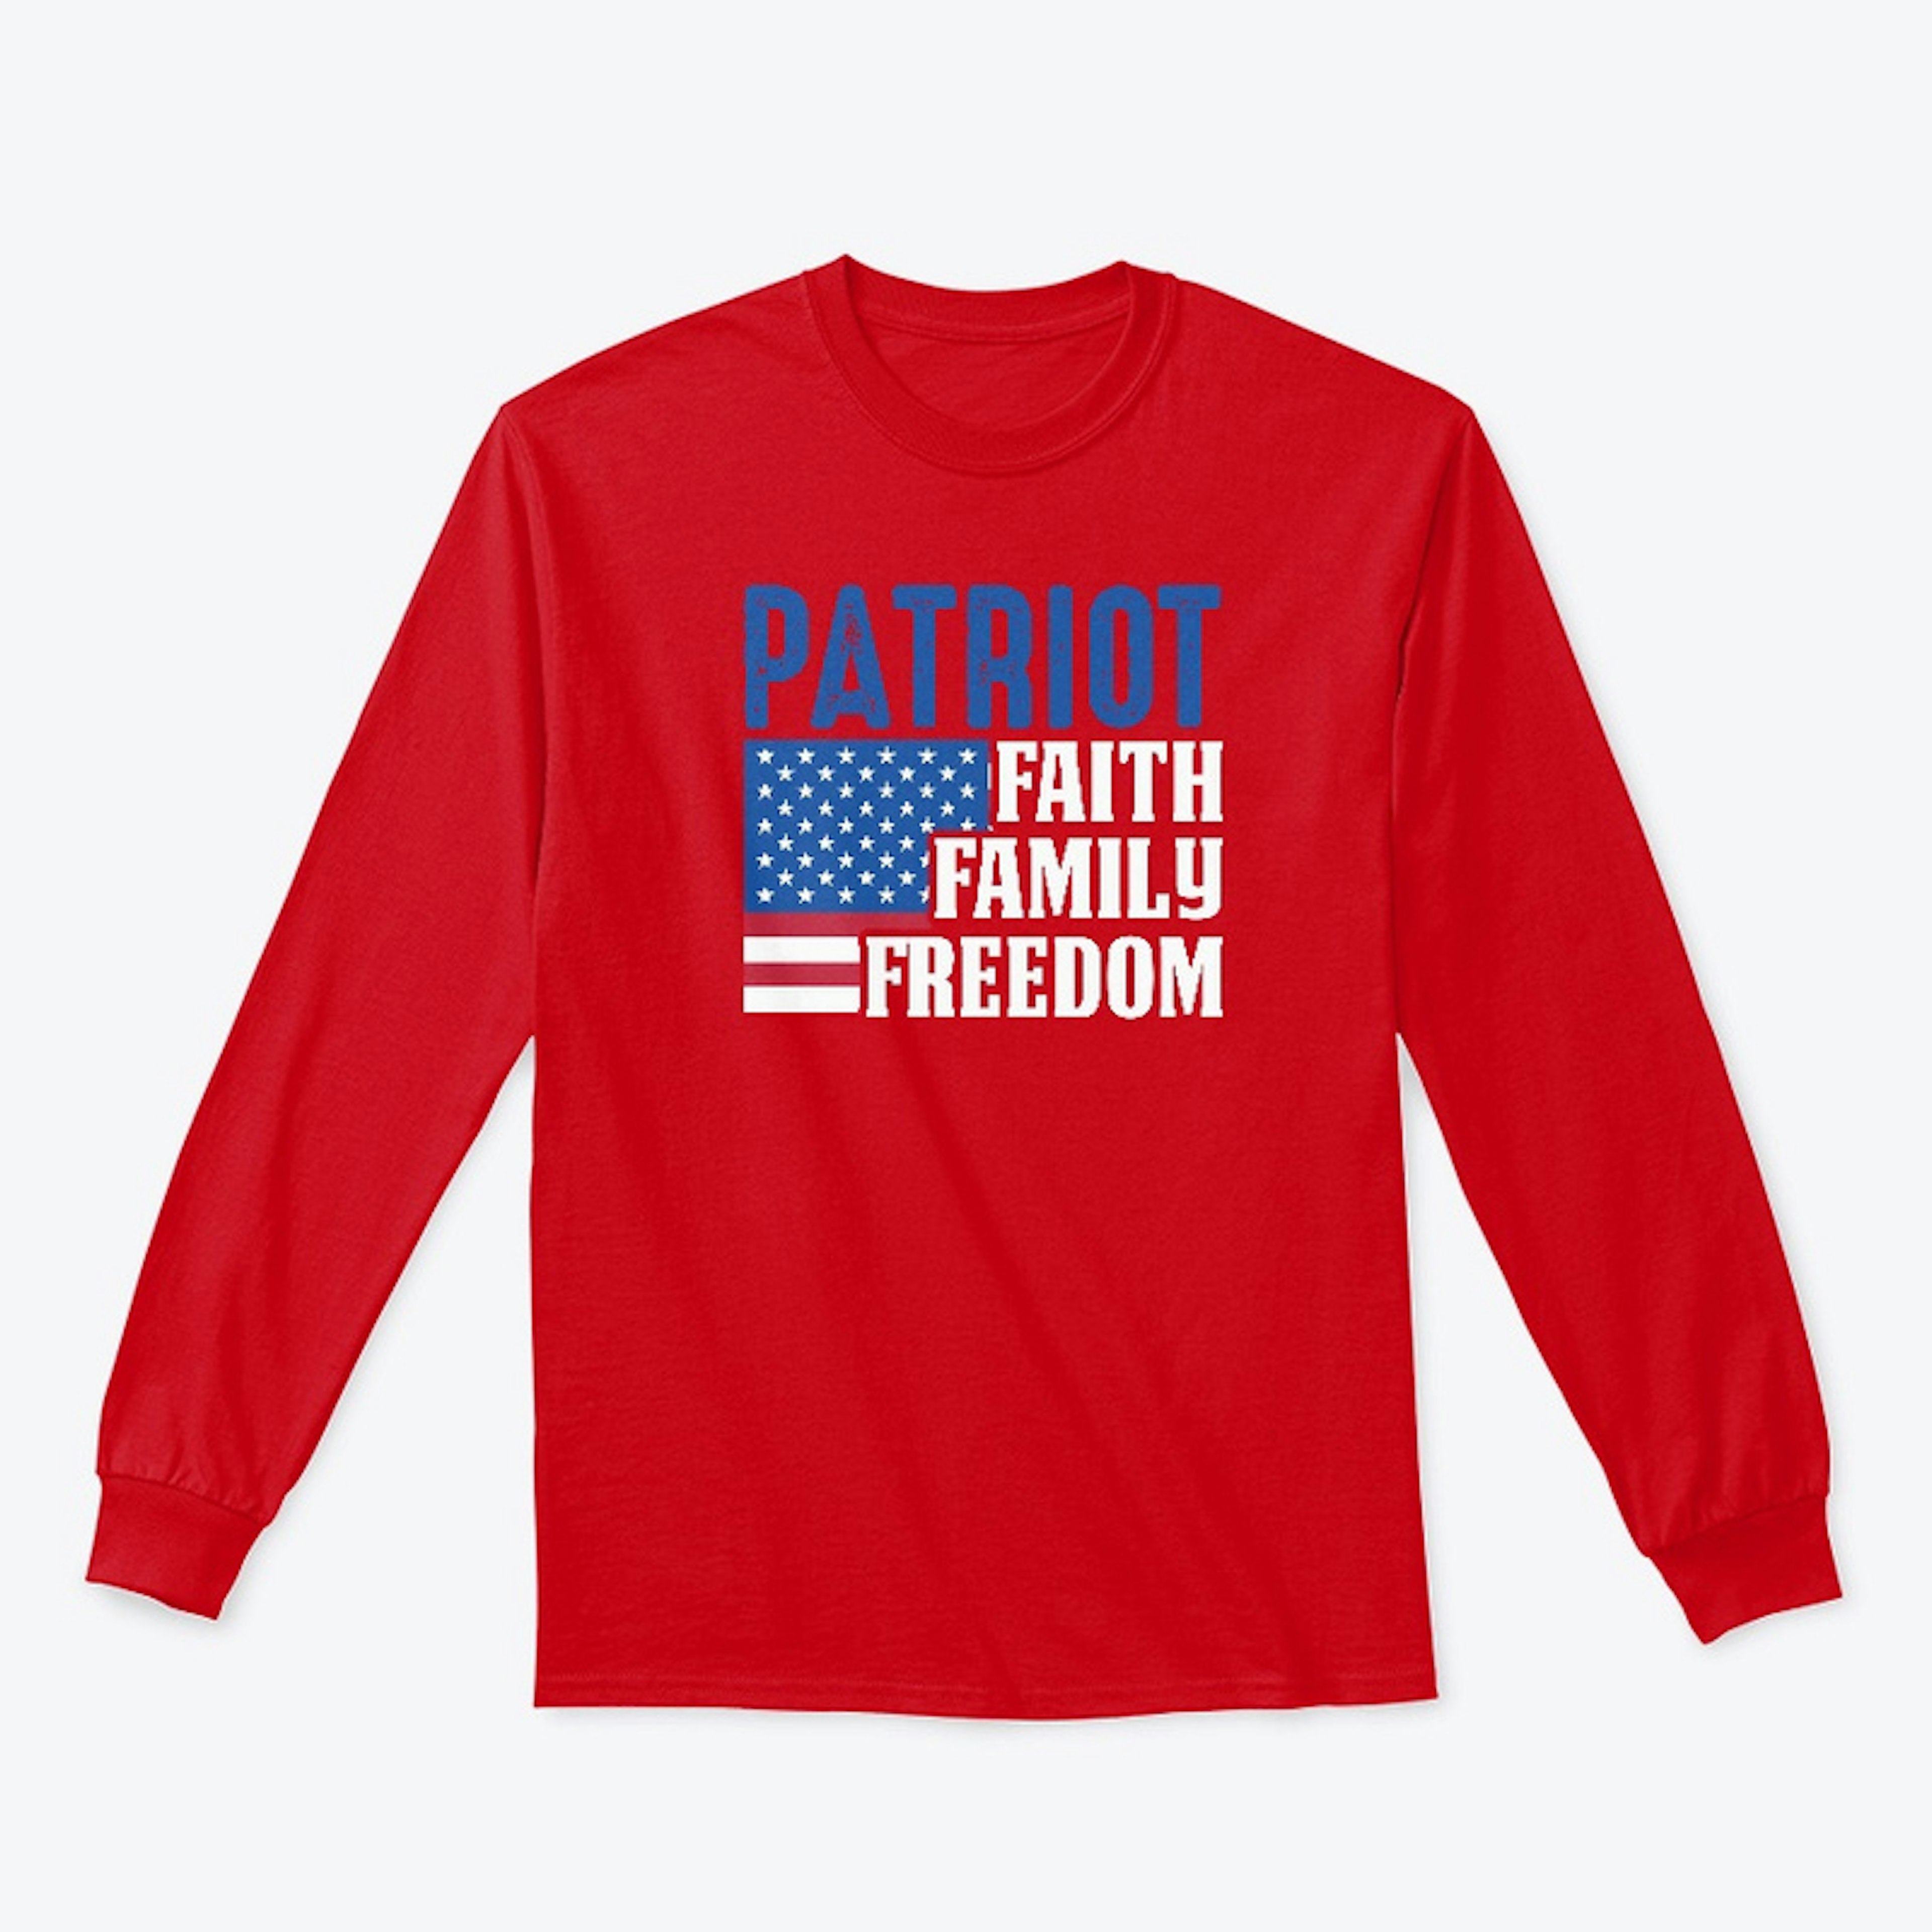 PATRIOT Faith Family Freedom RED